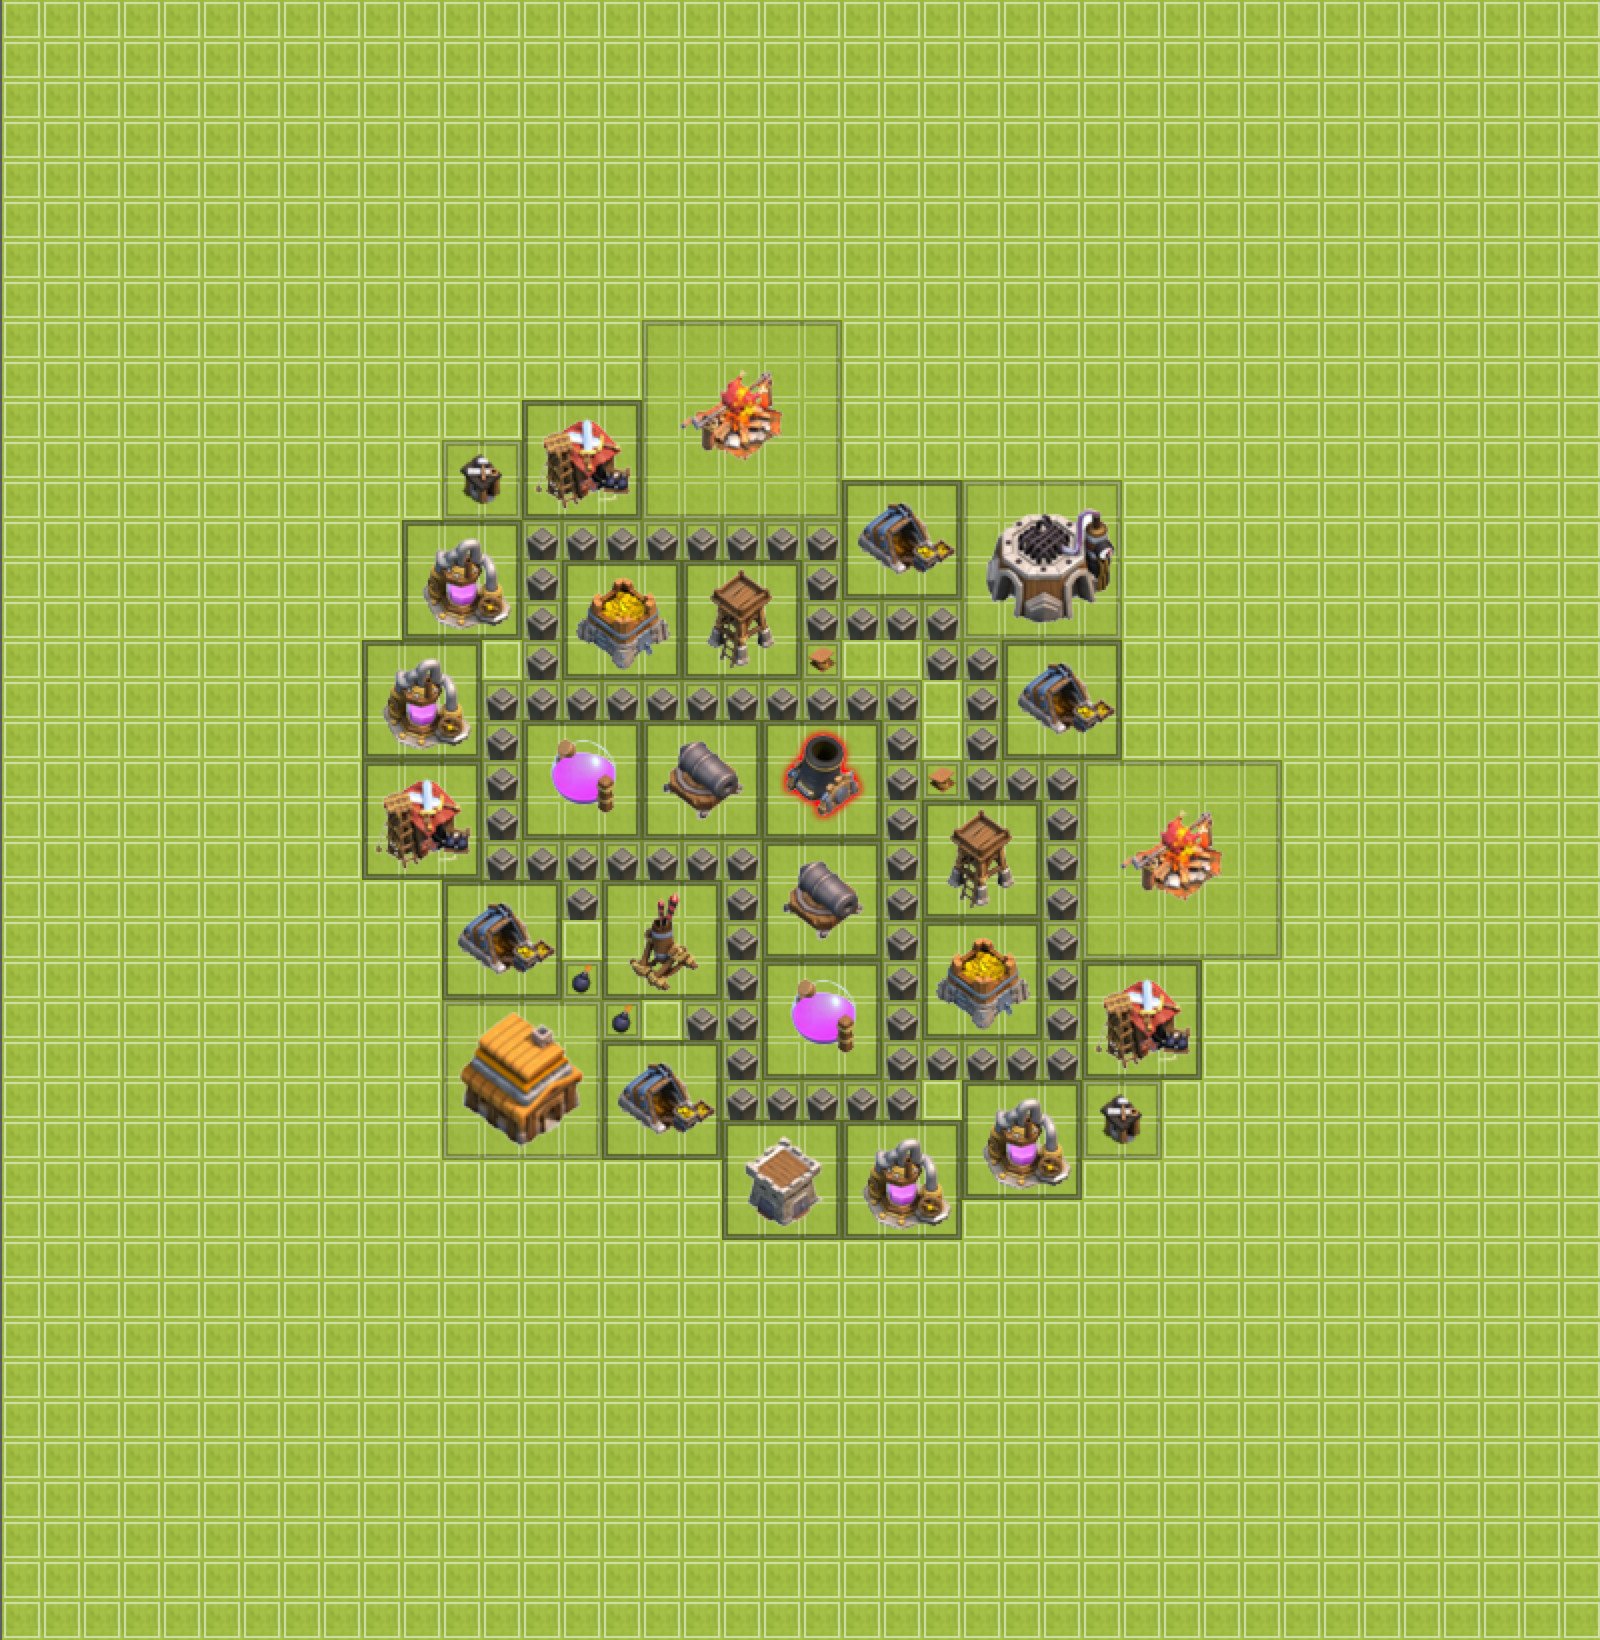 Farming Base TH4 - plan / layout / design - Clash of Clans, #11.